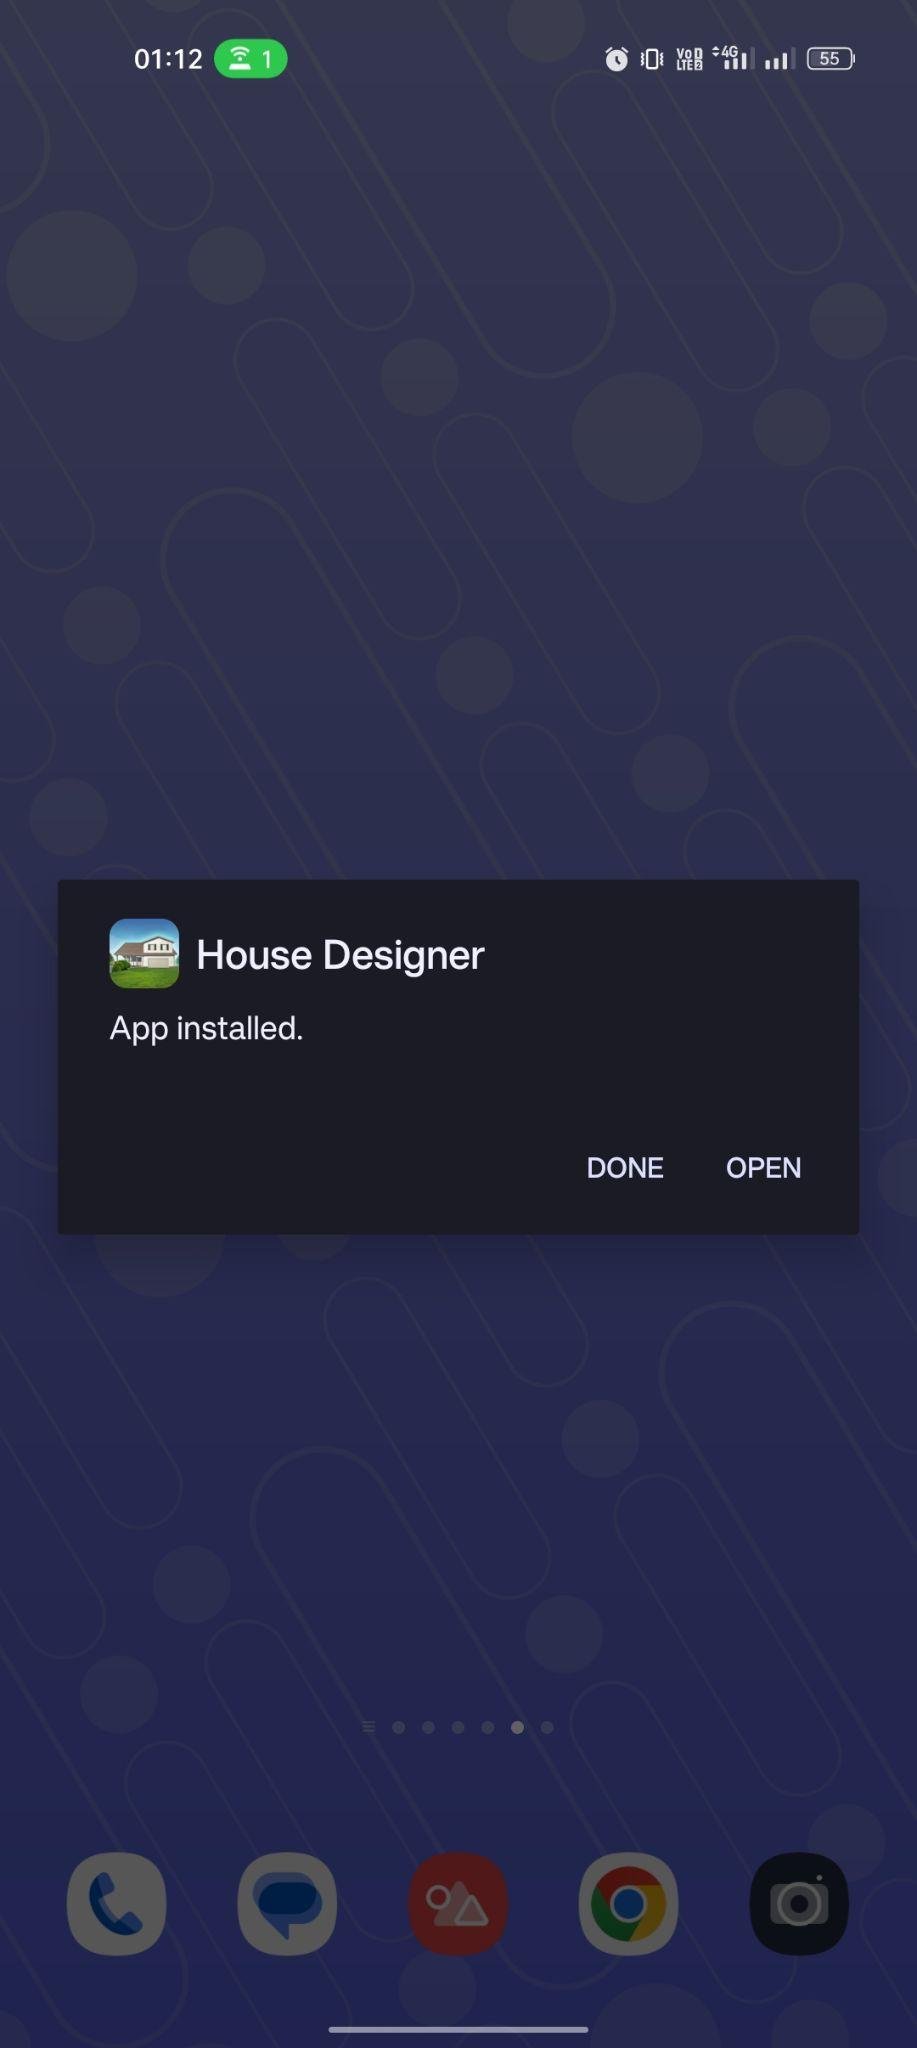 House Designer apk installed